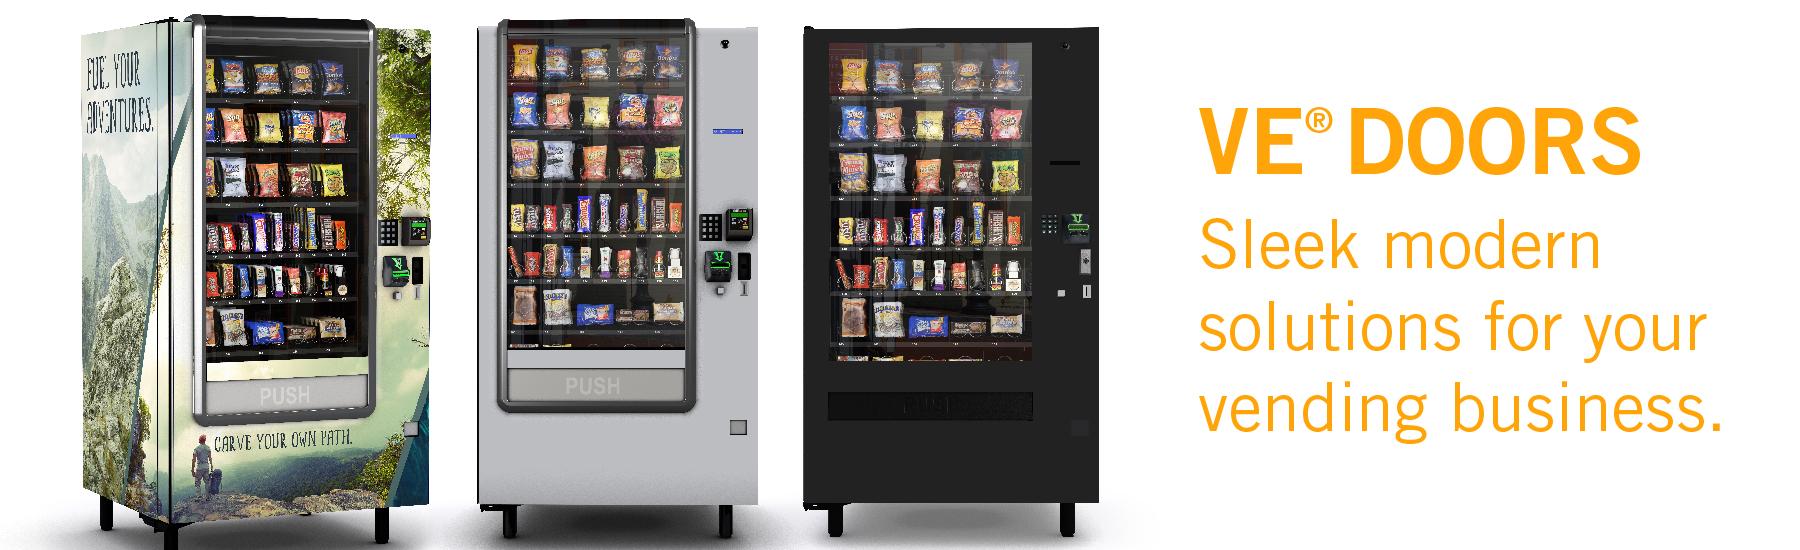 vesolutions.co - Sleek, Modern Vending Machine Doors